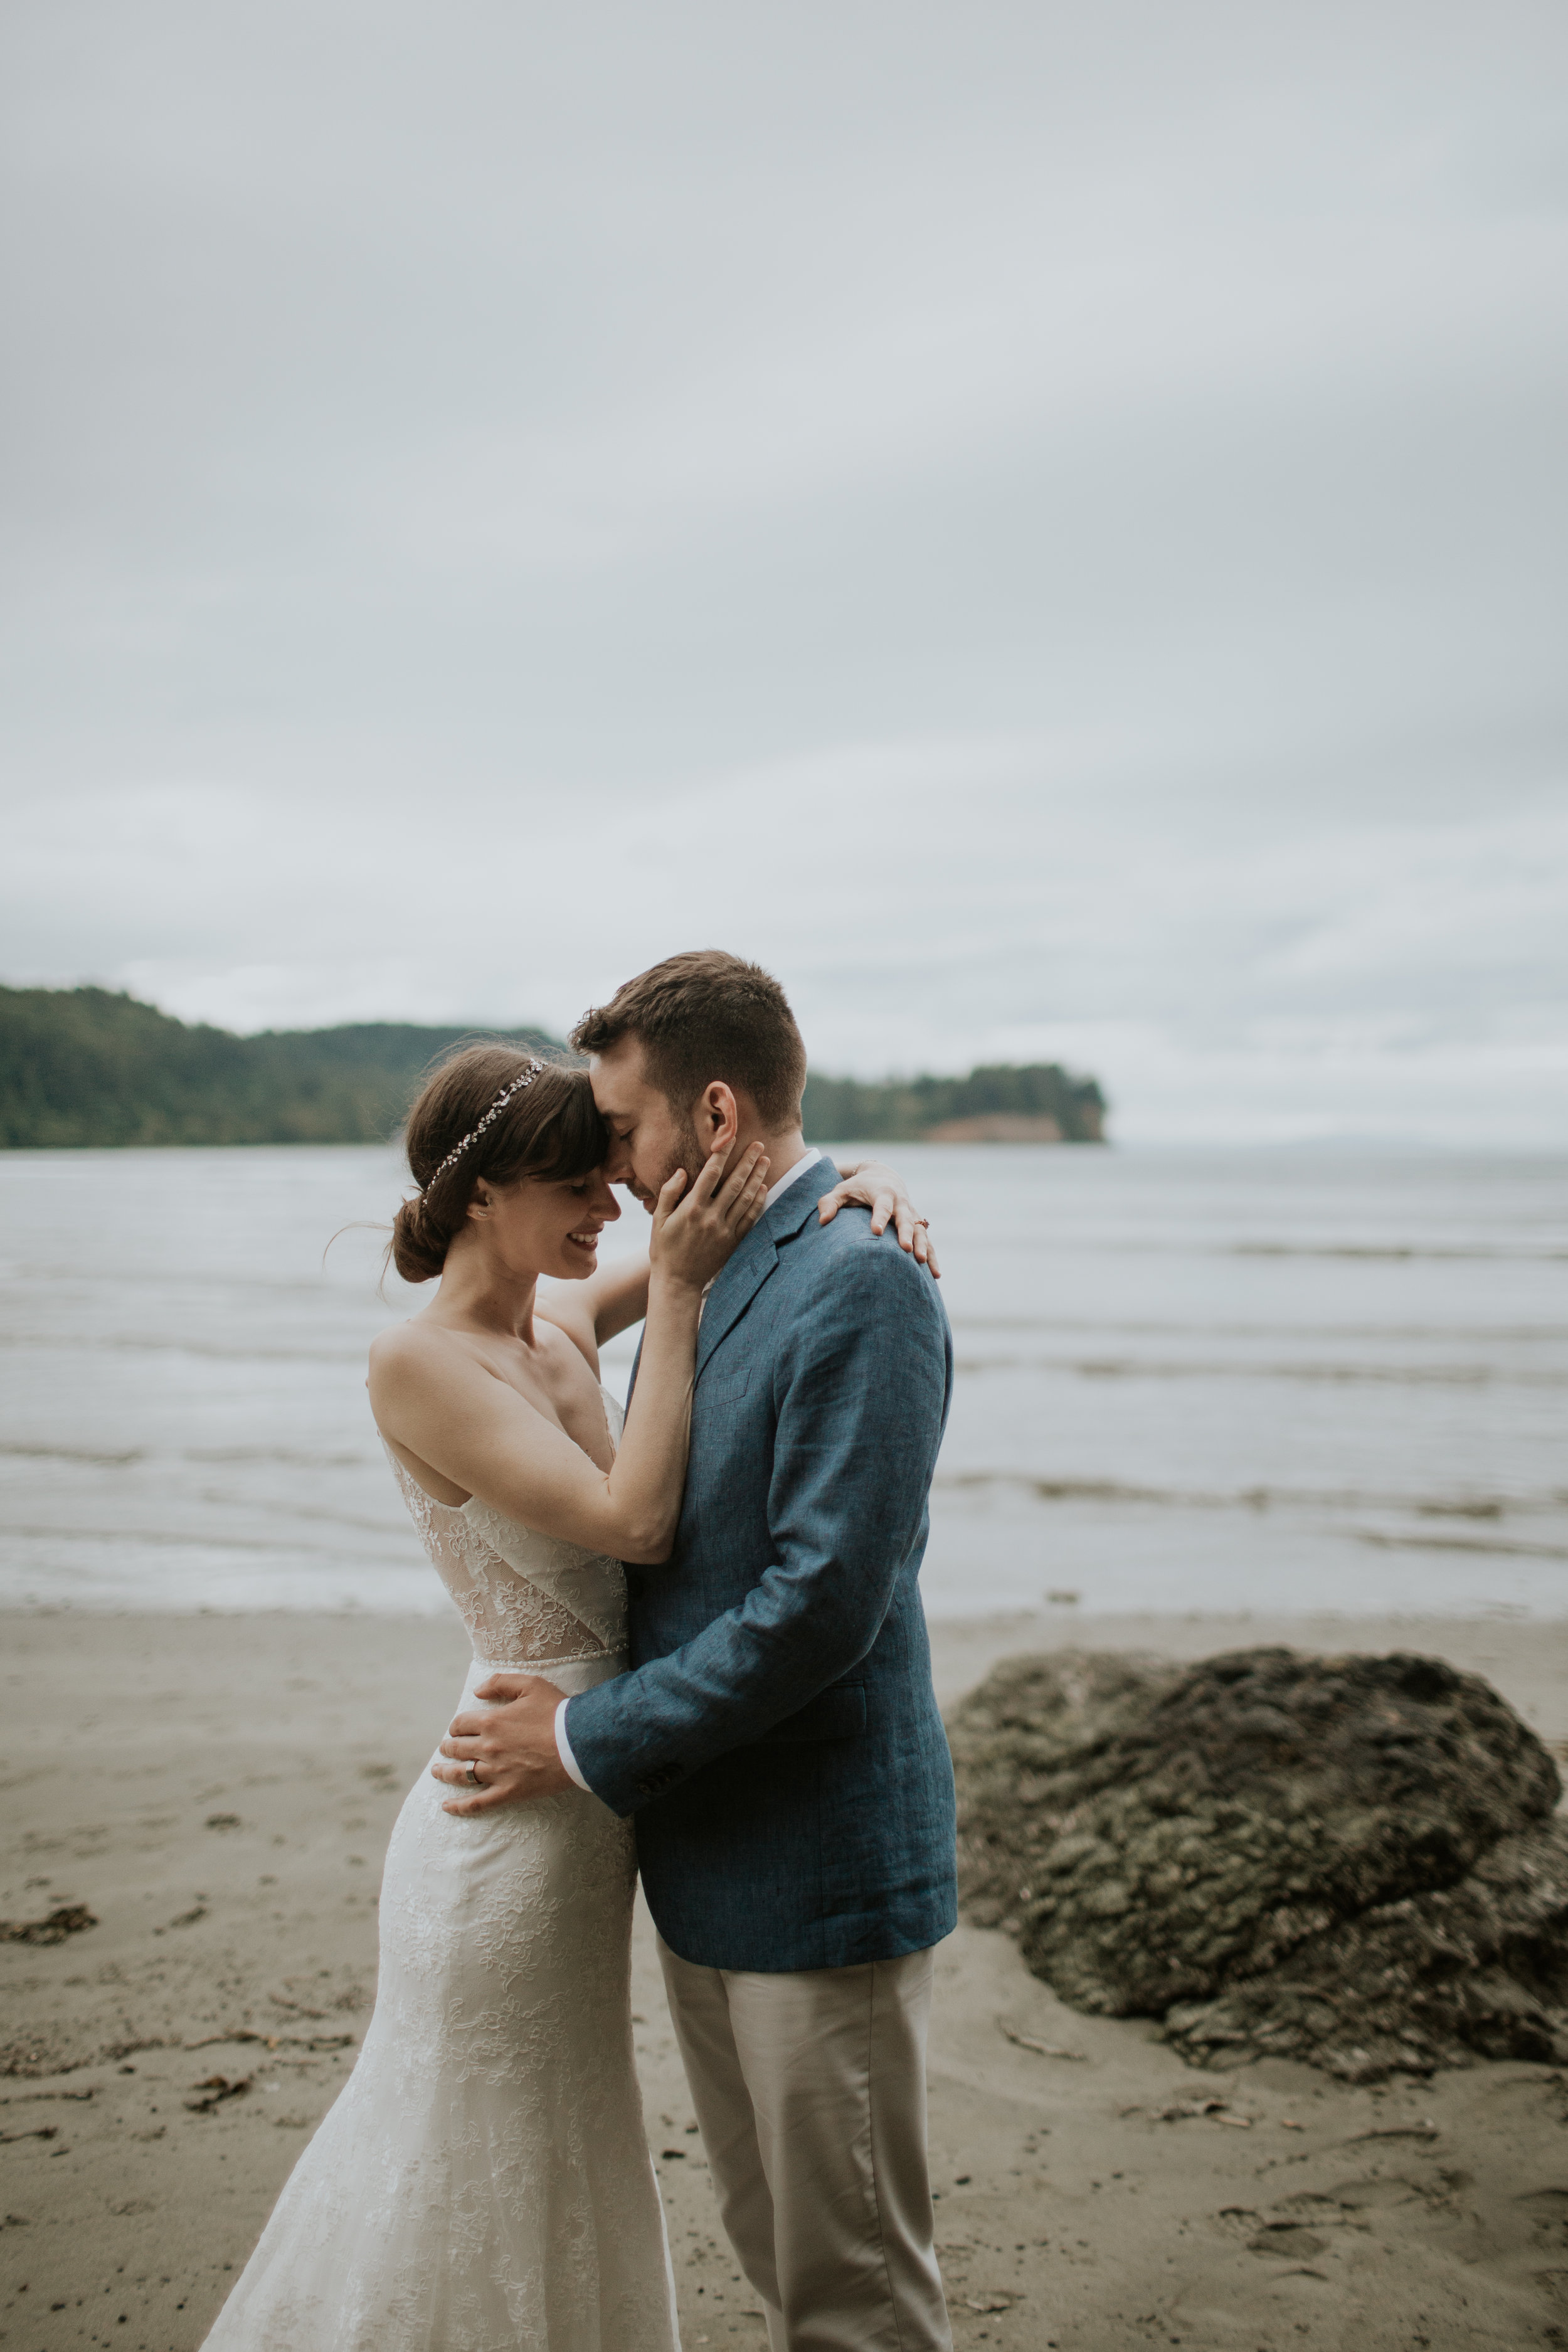 PNW-elopement-wedding-engagement-olympic national park-port angeles-hurricane ridge-lake crescent-kayla dawn photography- photographer-photography-kayladawnphoto-291.jpg